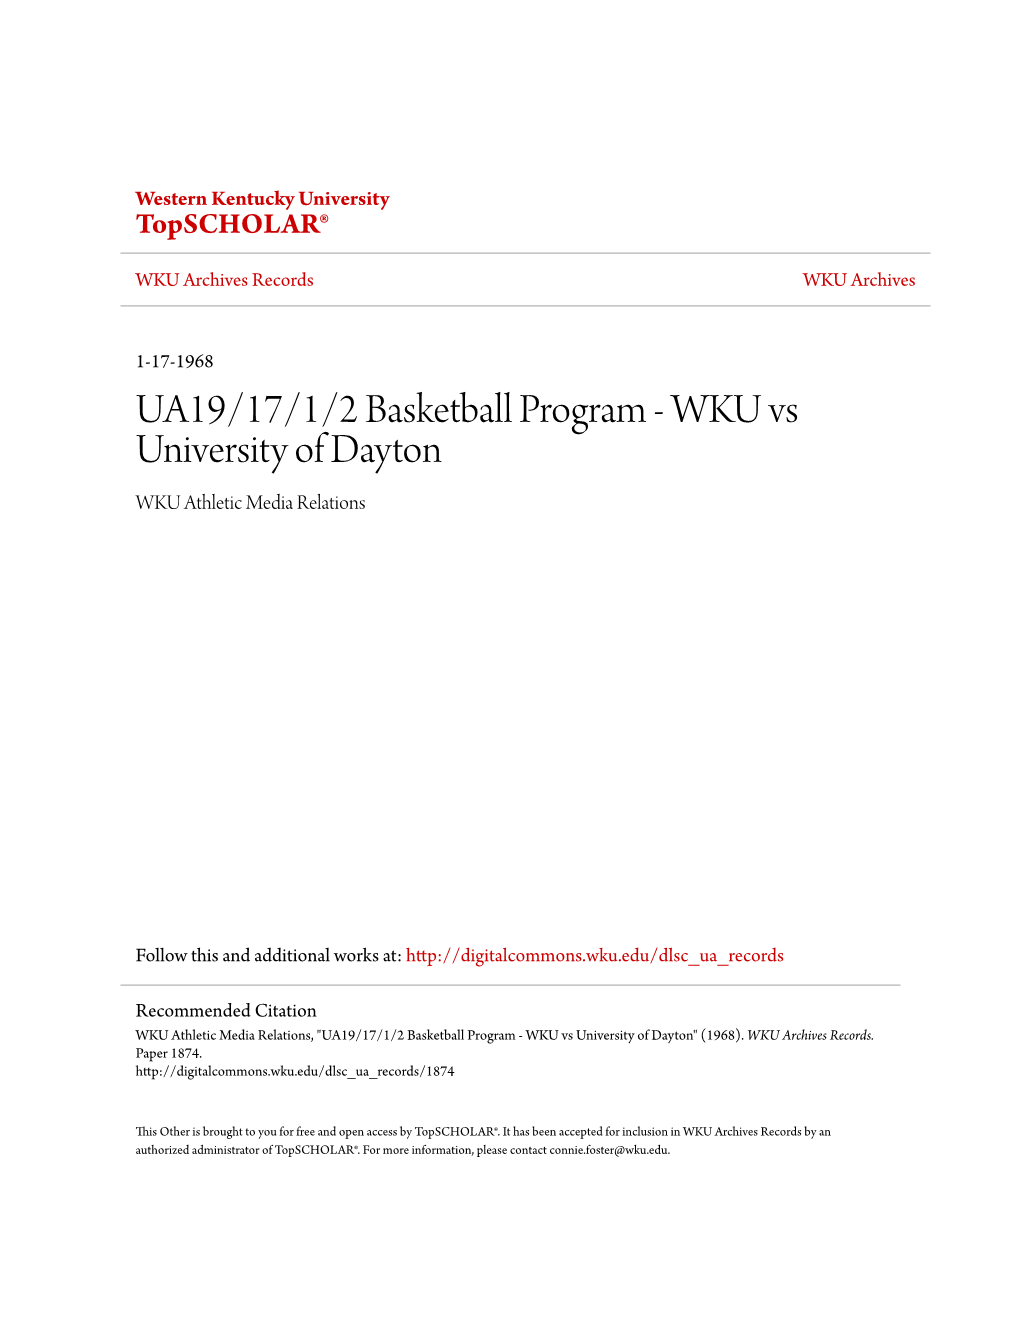 UA19/17/1/2 Basketball Program - WKU Vs University of Dayton WKU Athletic Media Relations